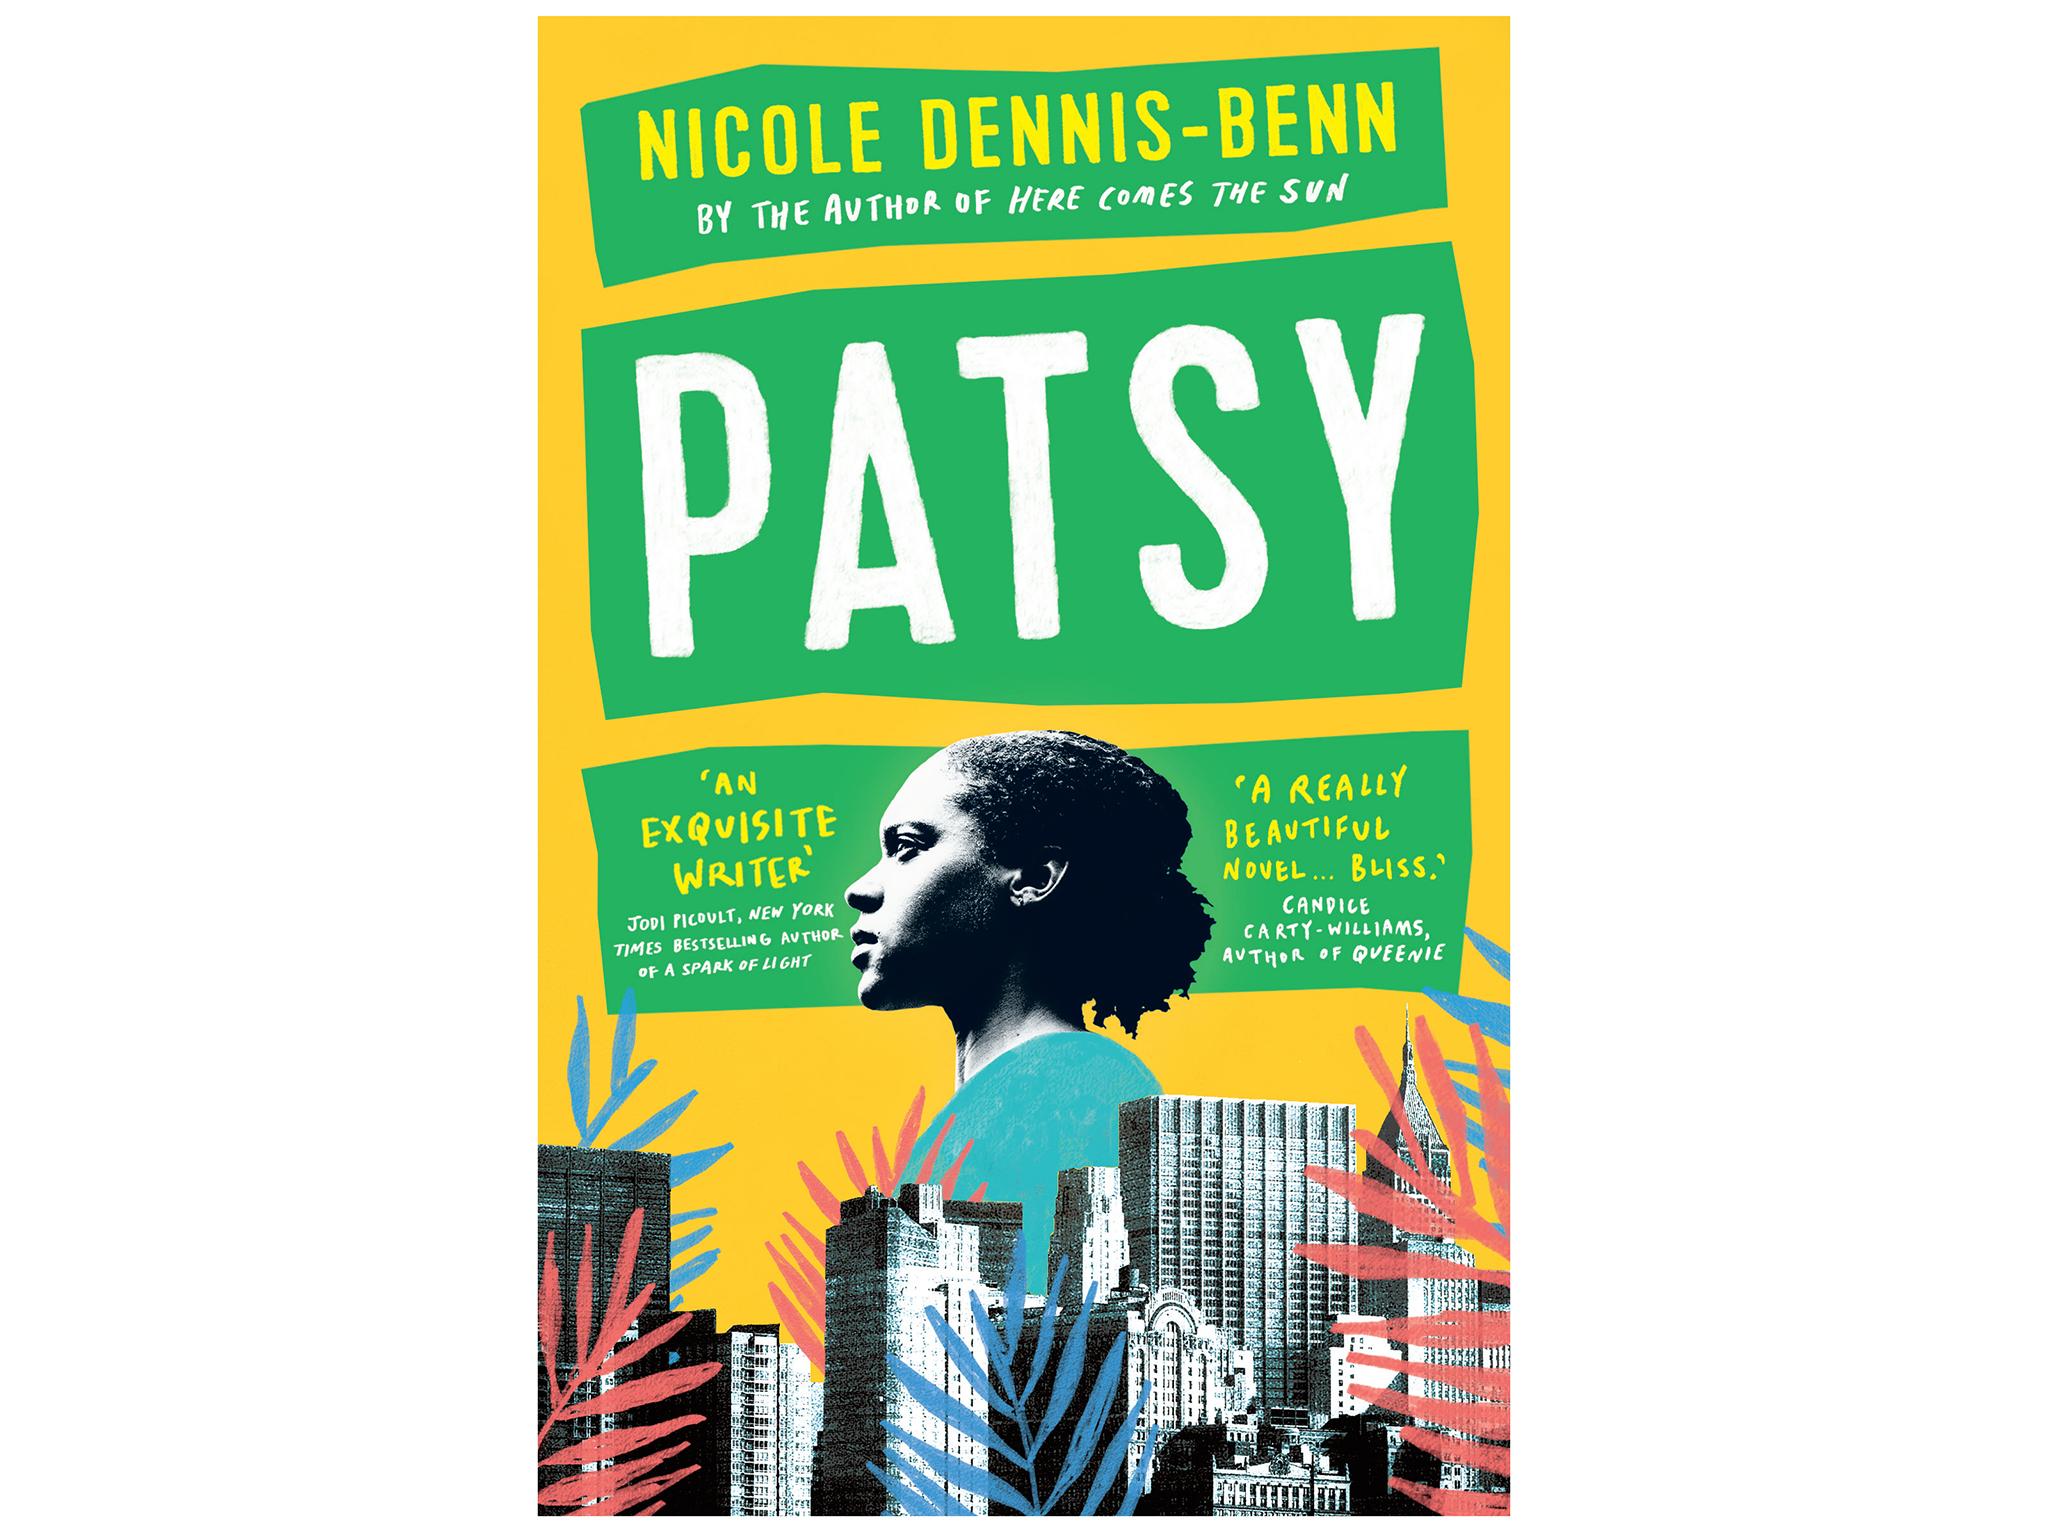 Best LGBTQ books IndyBest patsy.jpg